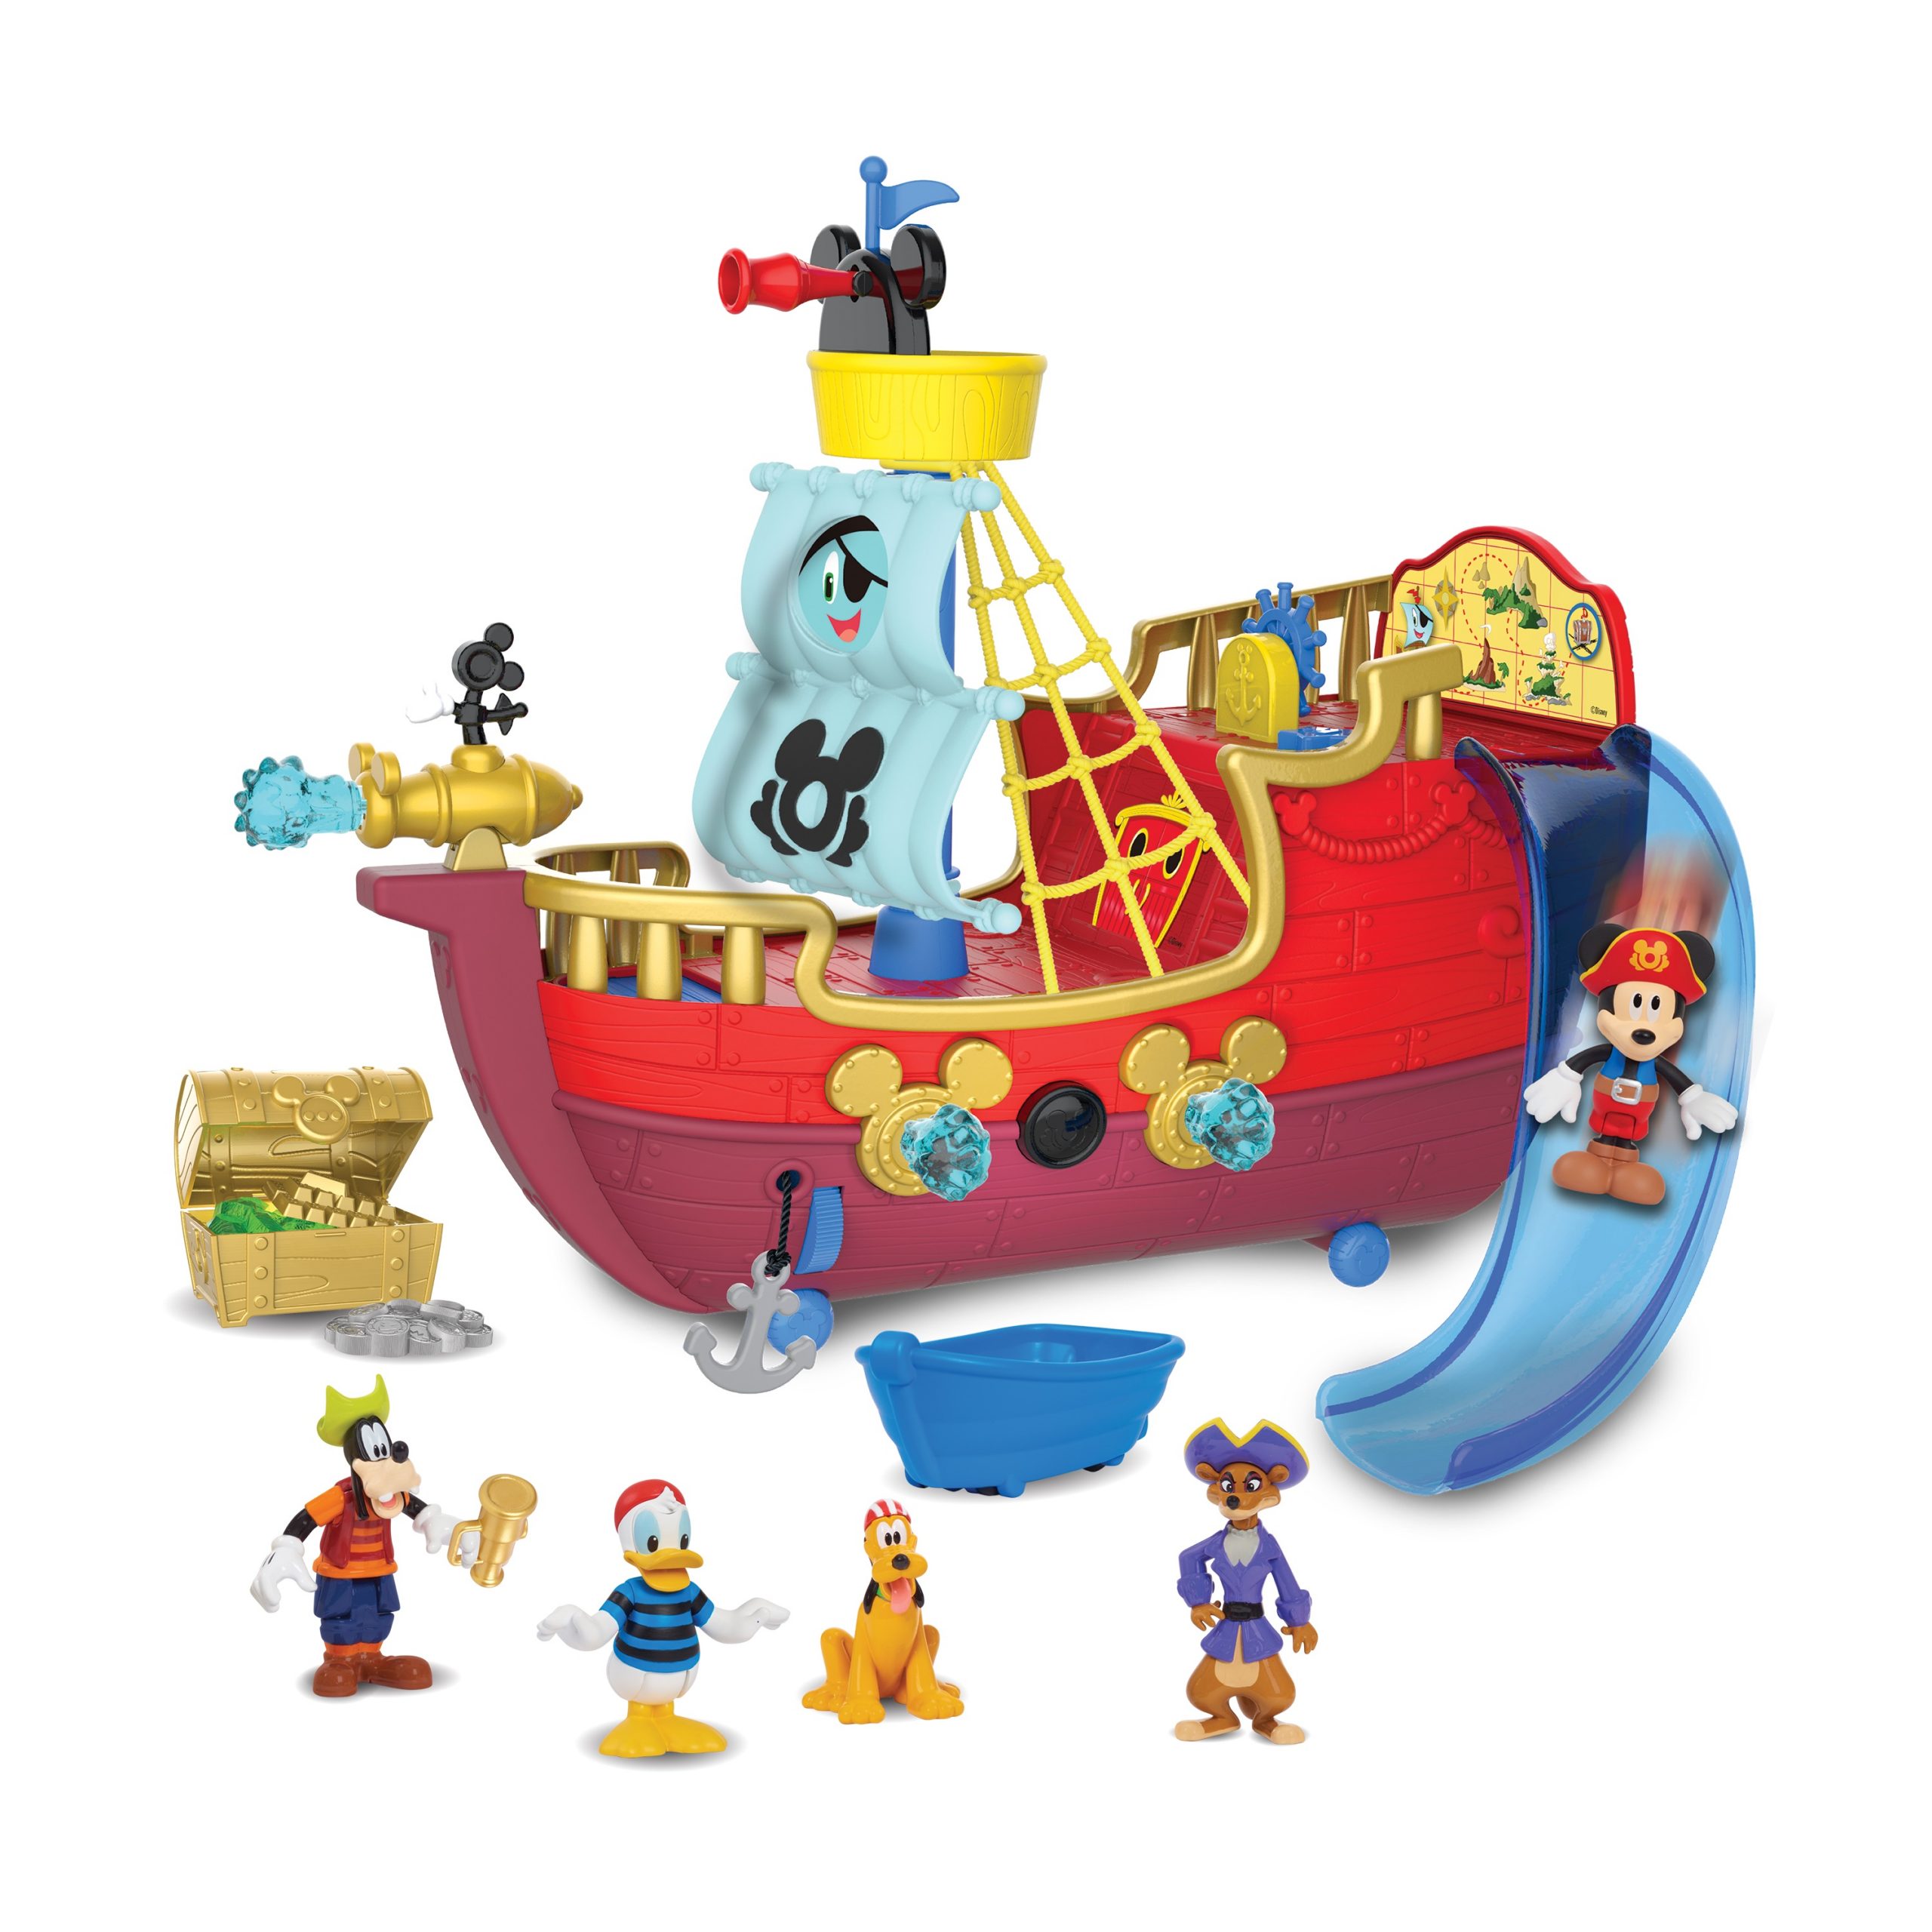 Disney Junior’s Mickey Mouse Funhouse Treasure Adventure Pirate Ship